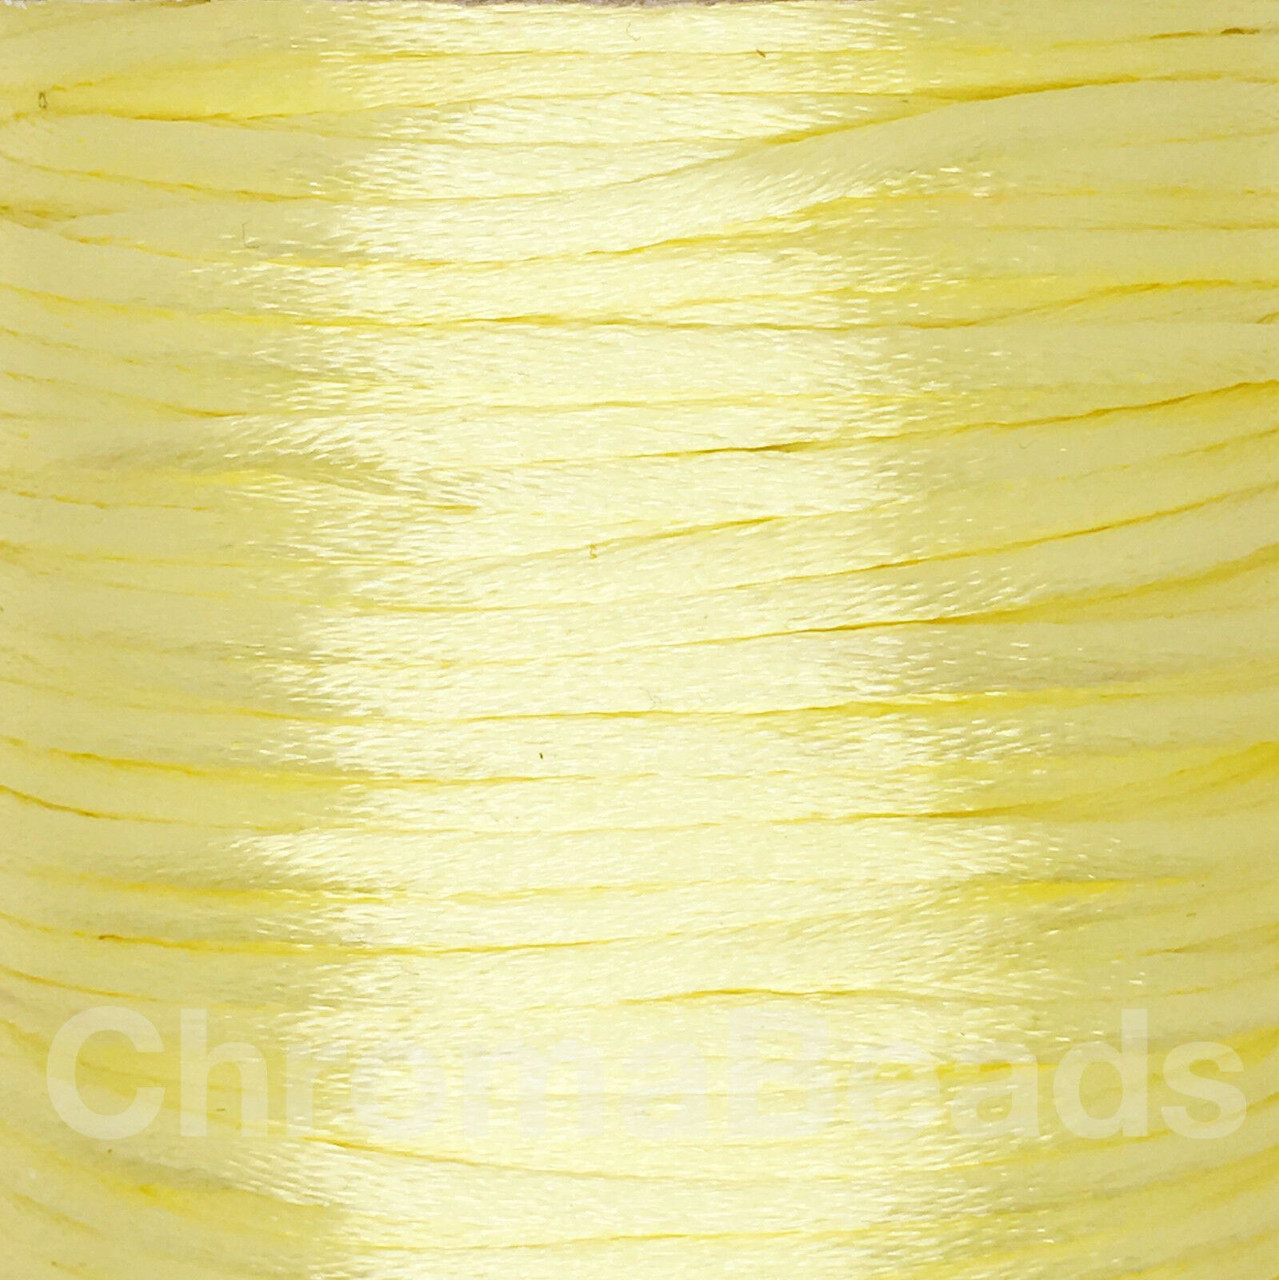 2x Reels of Nylon Cord (Rattail) - Lemon, approx 45m each